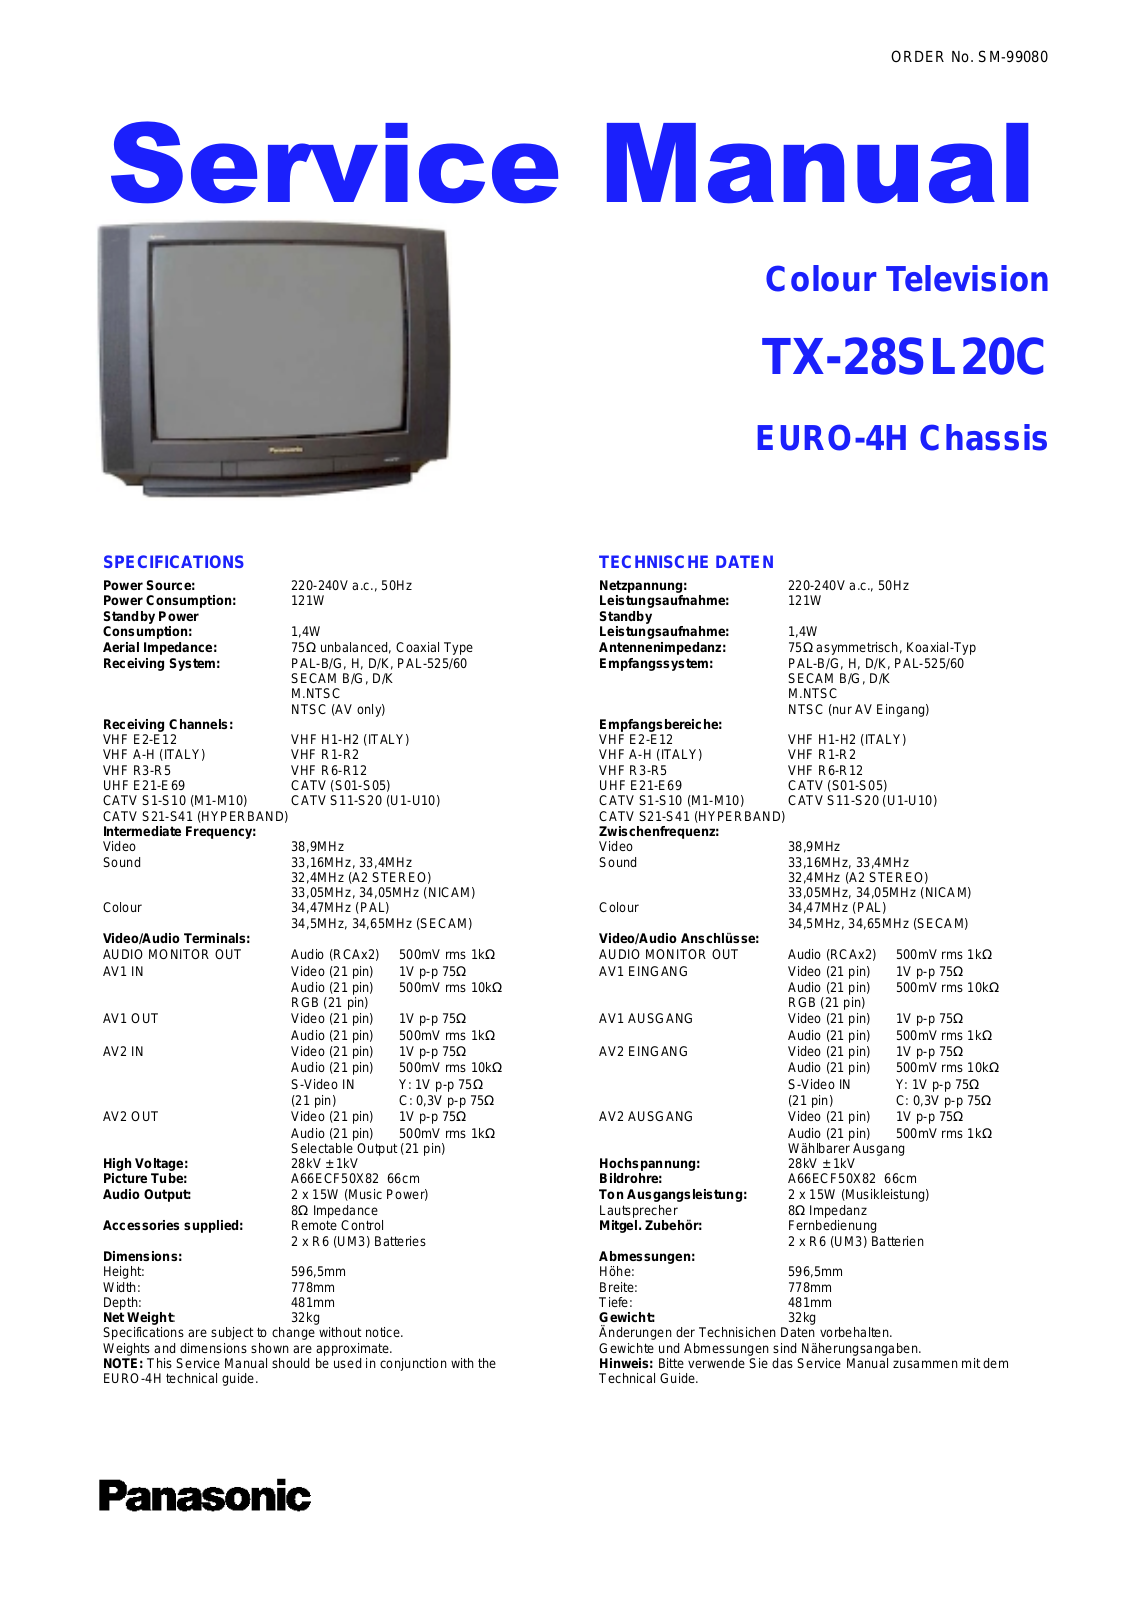 Panasonic TX-28SL20C Service Manual